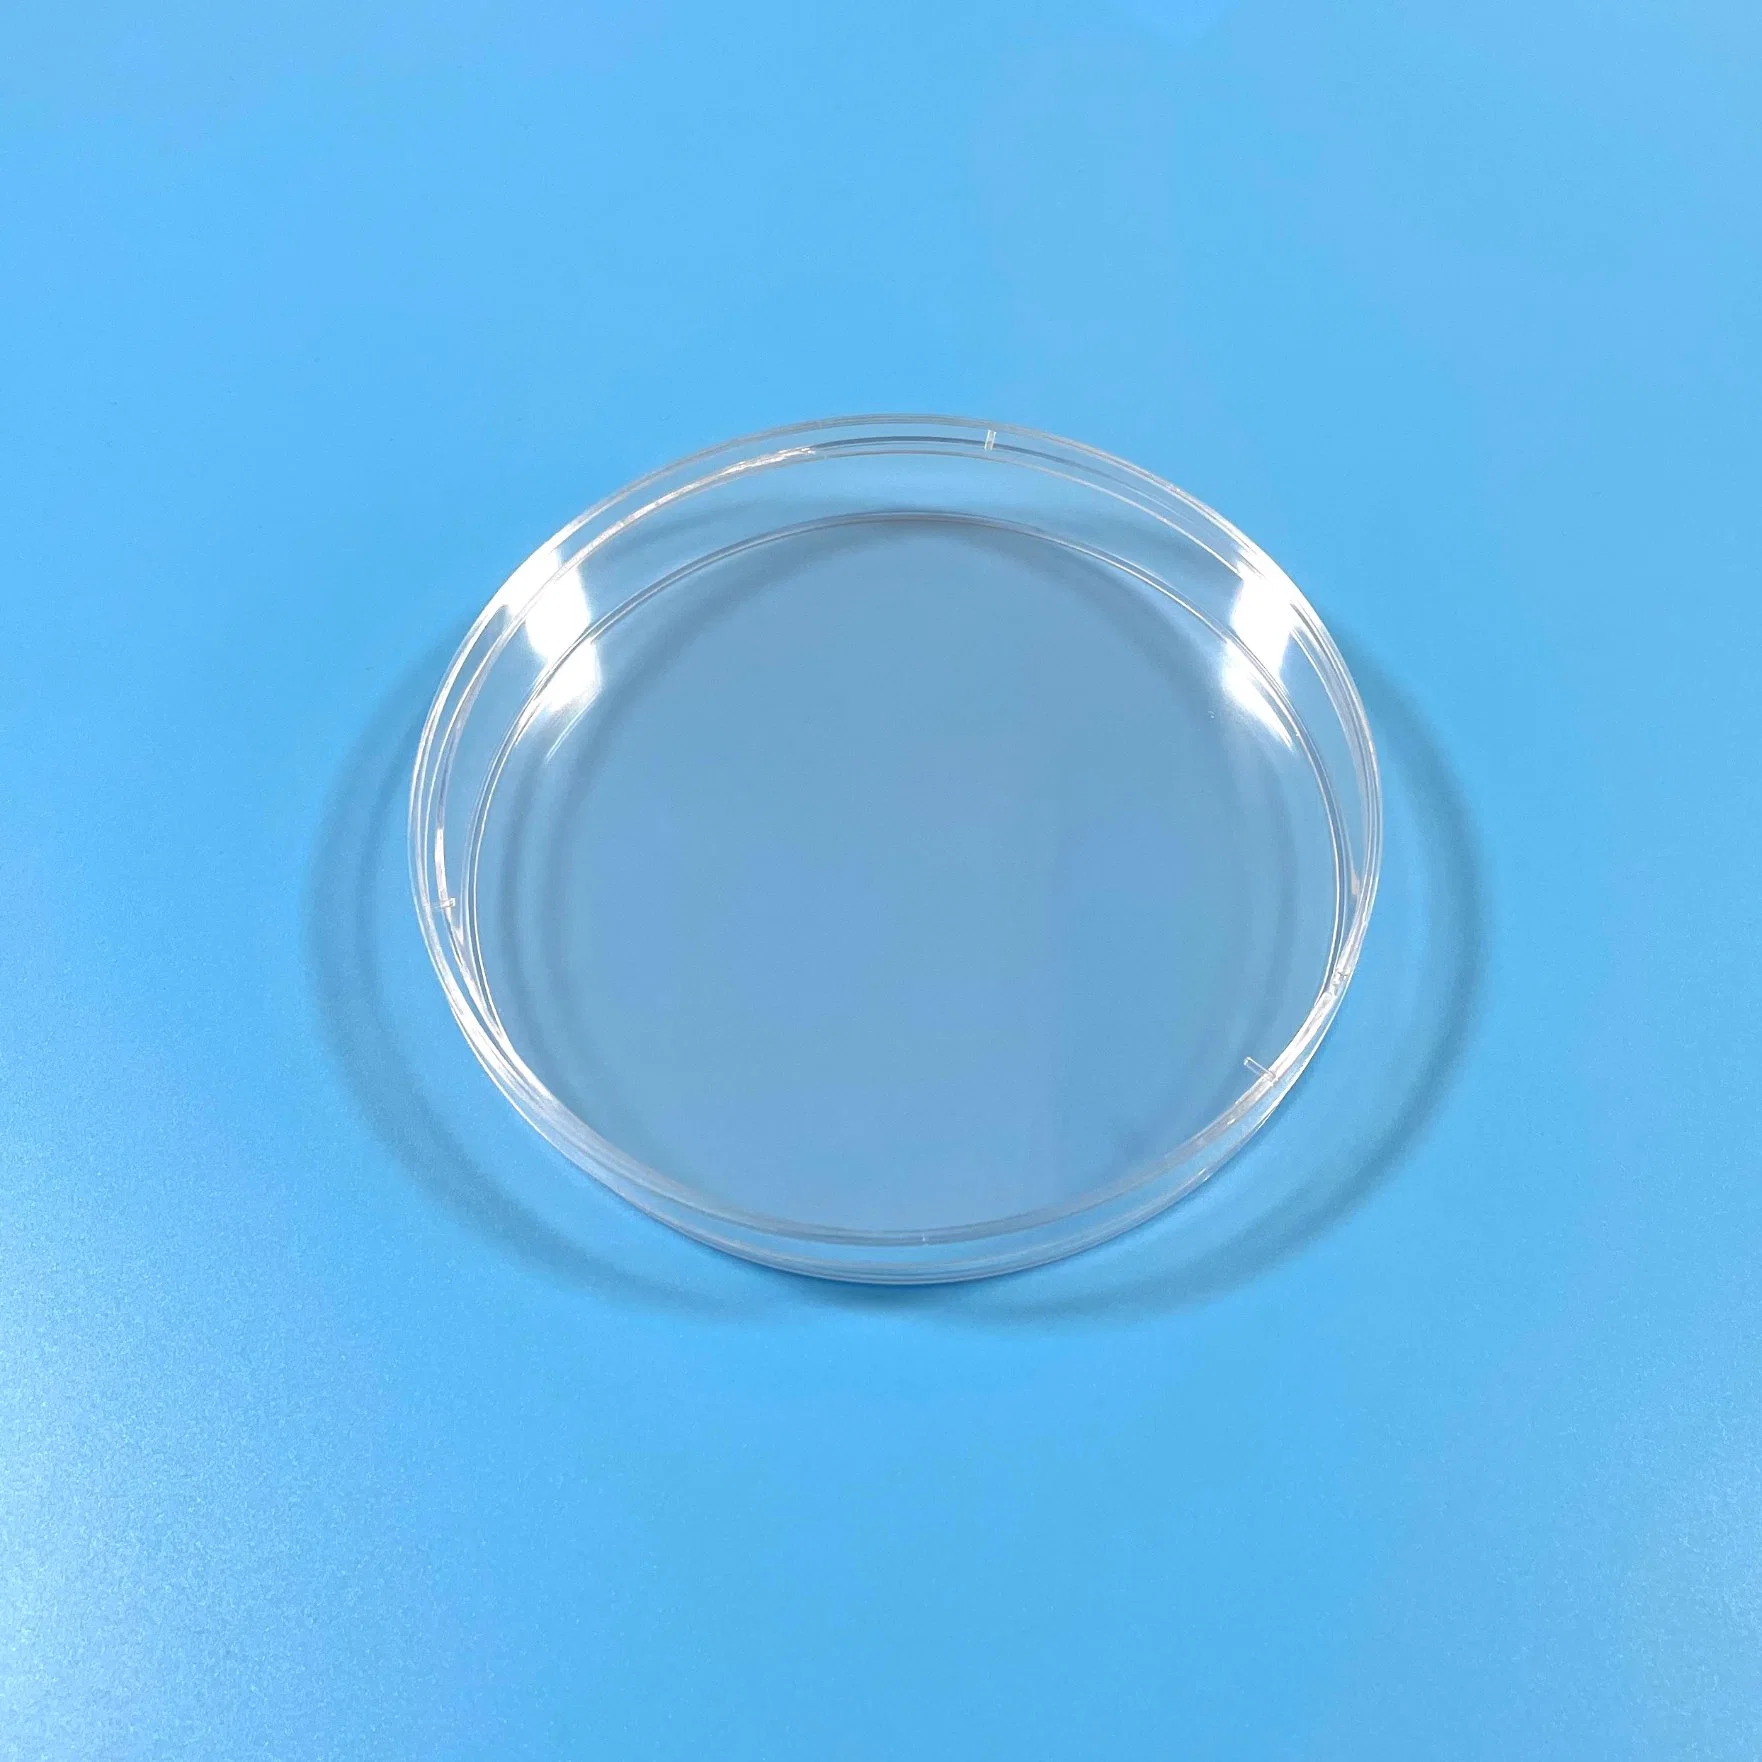 15cm Petri Dish 150mm Used Imported Material Sterile Laboratory Medical Plastic Product Plastic Bacteria Culture Petri Dish